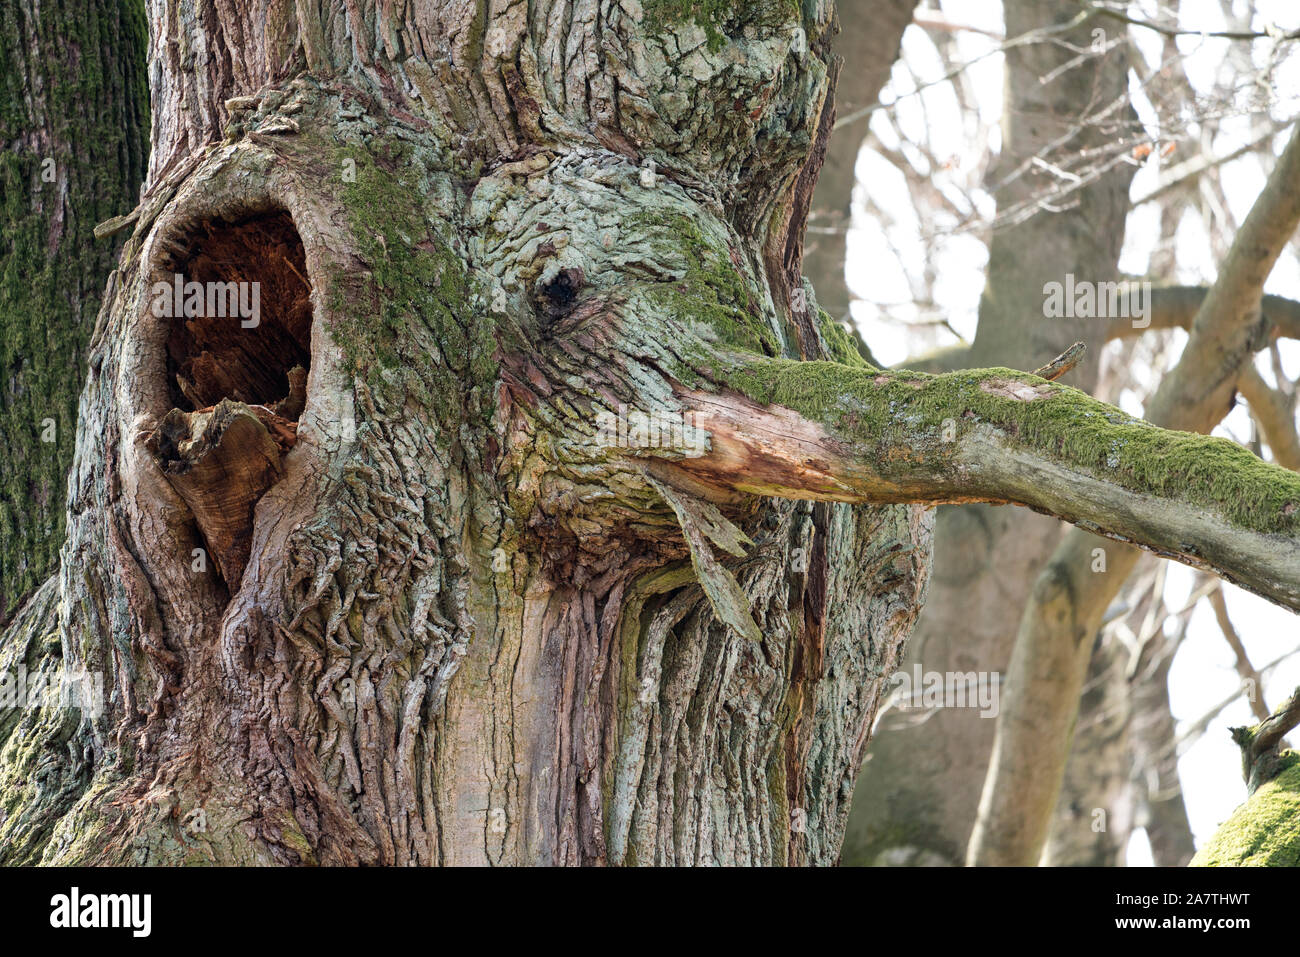 Tree face, looks like an elephant, Primeval forest Urwald Sababurg, Hofgeismar, Weser Uplands, Weserbergland, Hesse, Germany Stock Photo